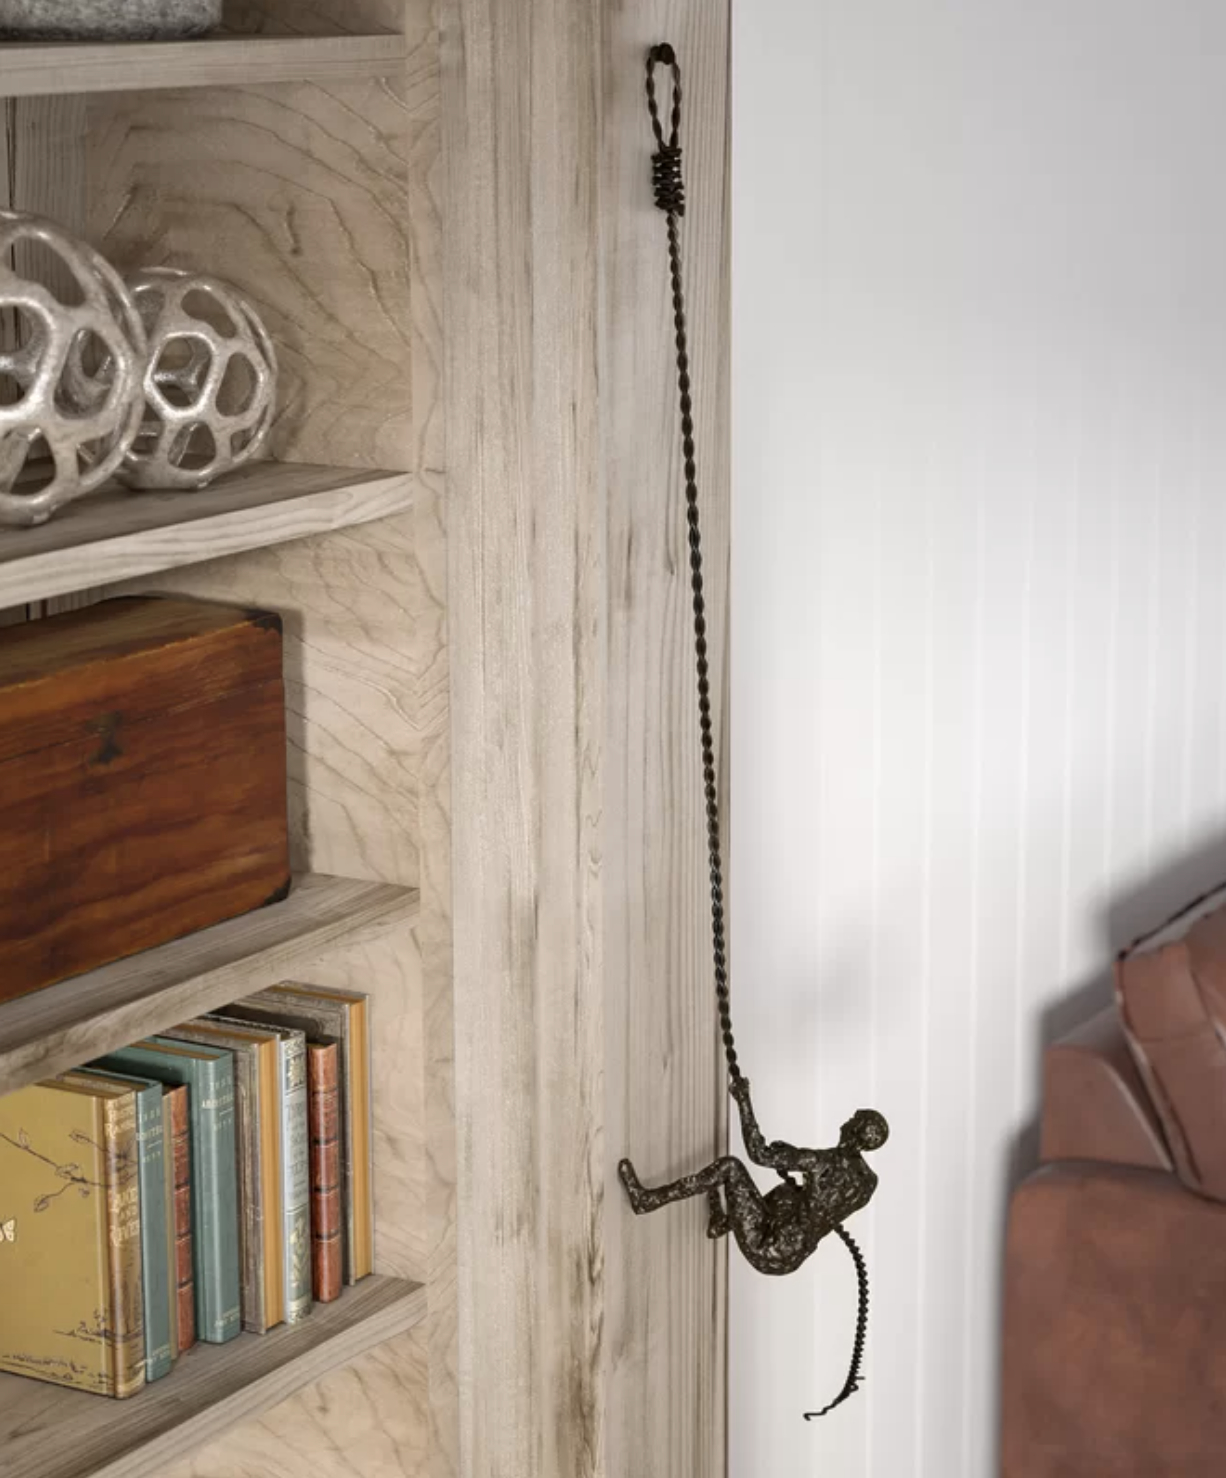 Decorative wall-mounted metal figure of a climber ascending, next to a bookshelf and sofa